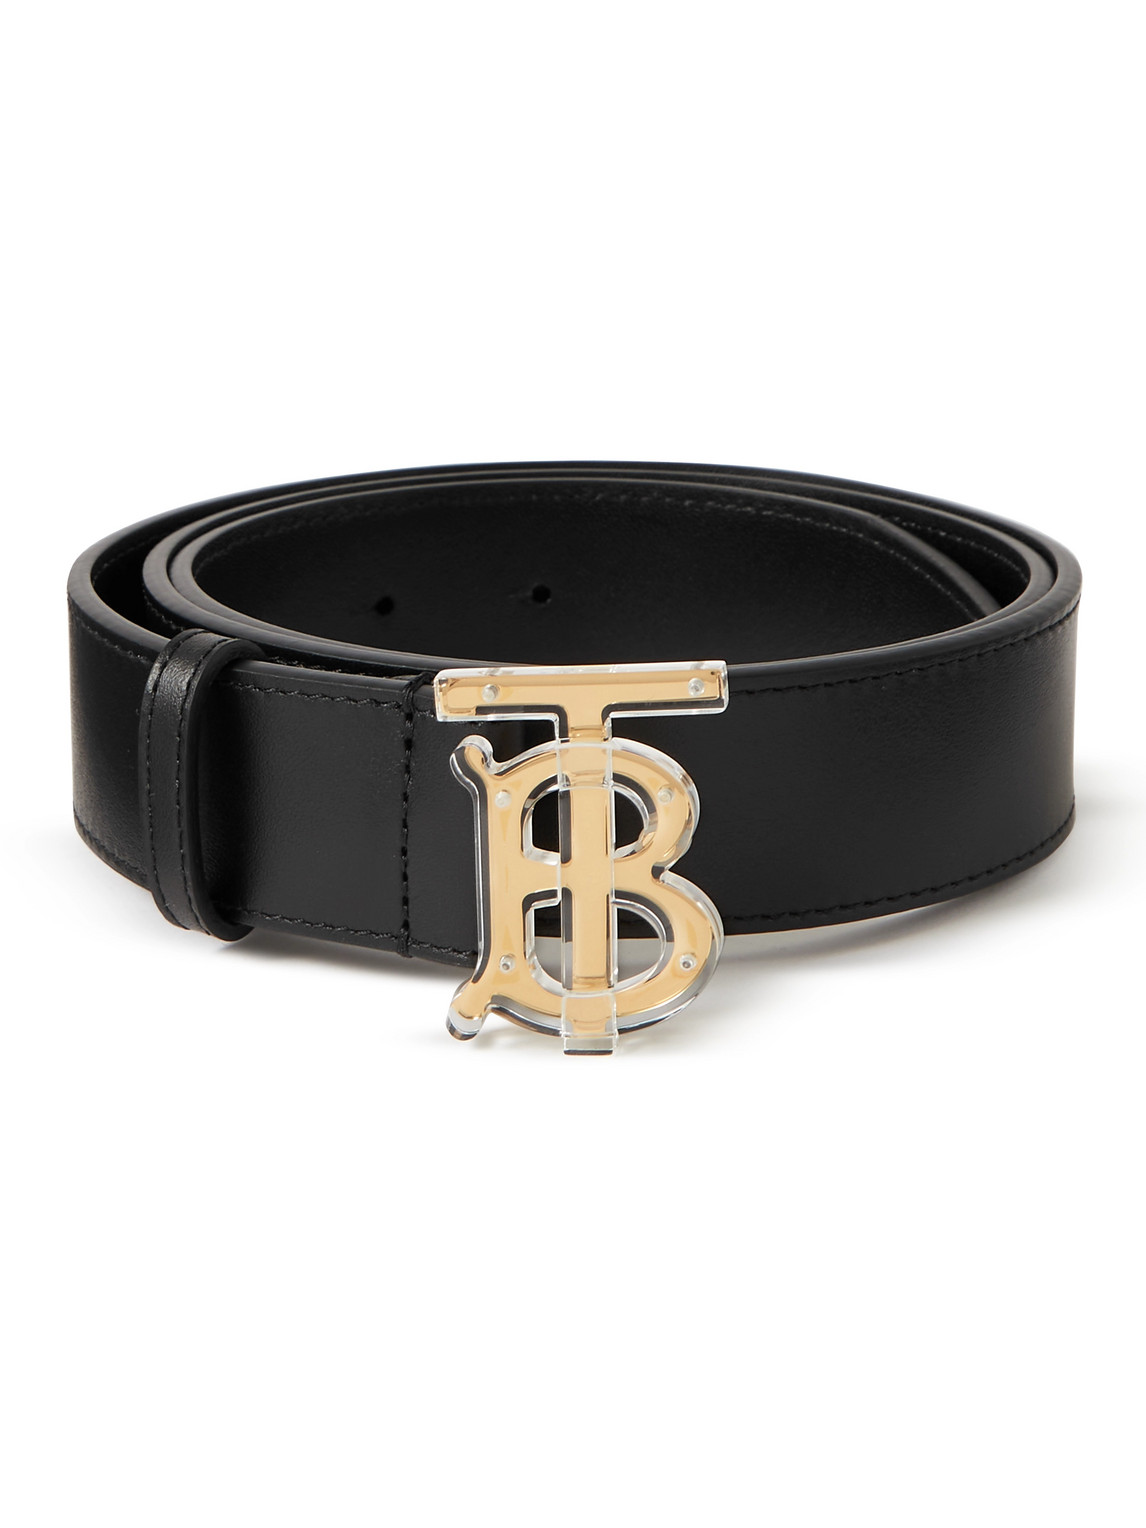 Burberry 3.5cm Leather Belt In Black